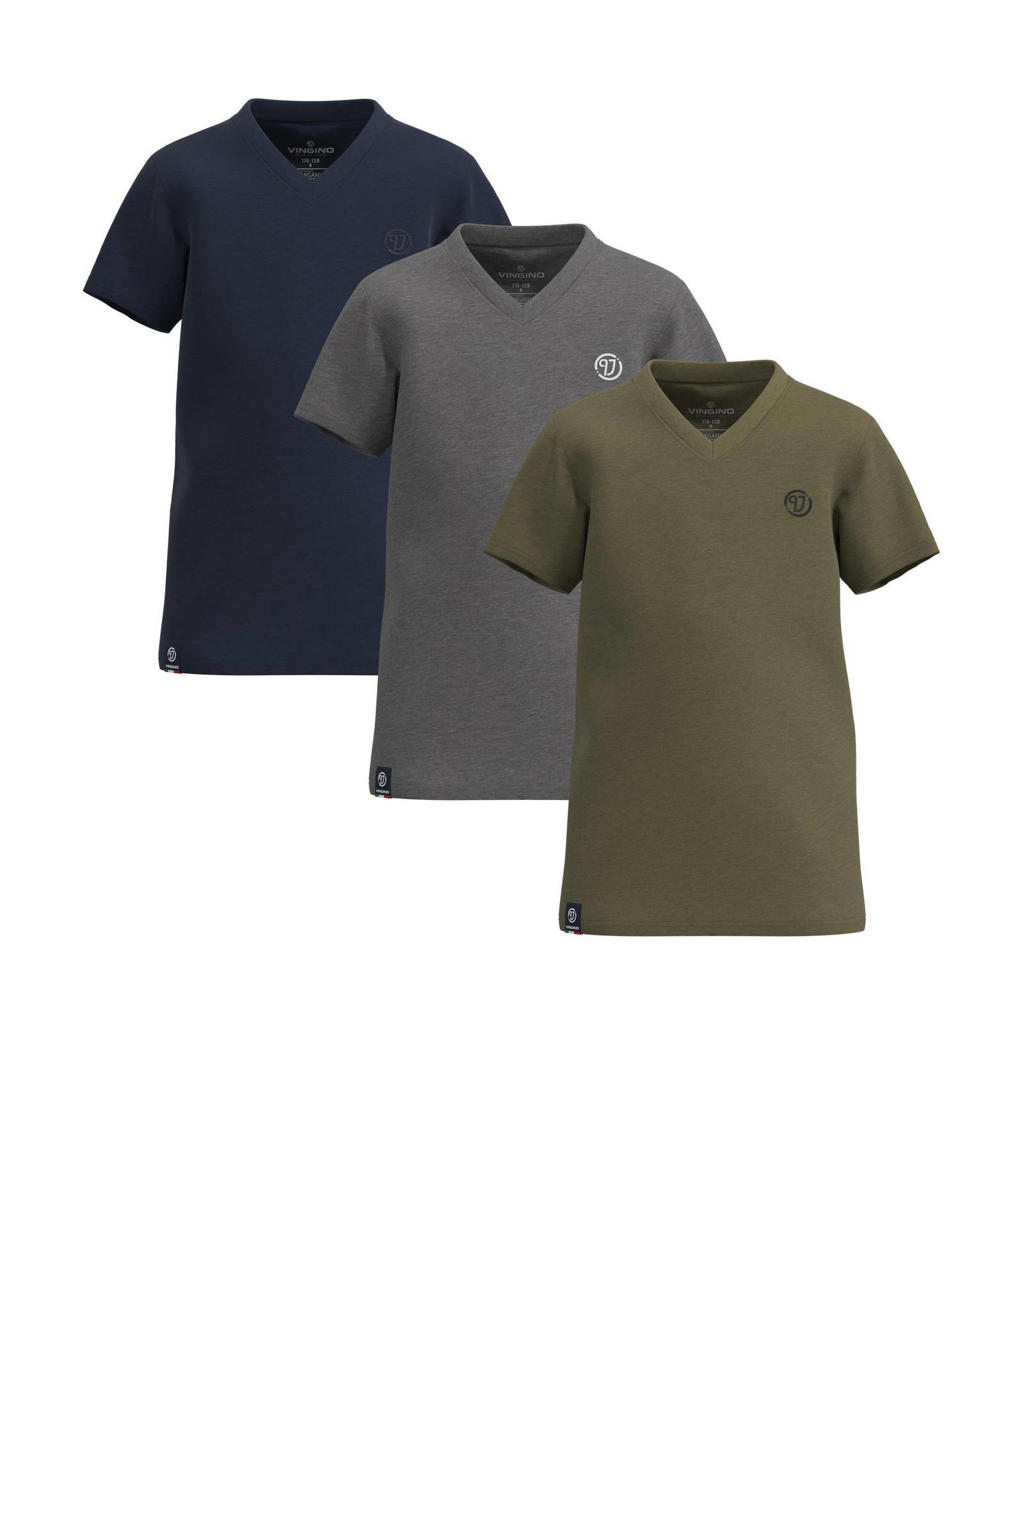 Vingino T-shirt - set van 3 kaki/grijs/donkerblauw